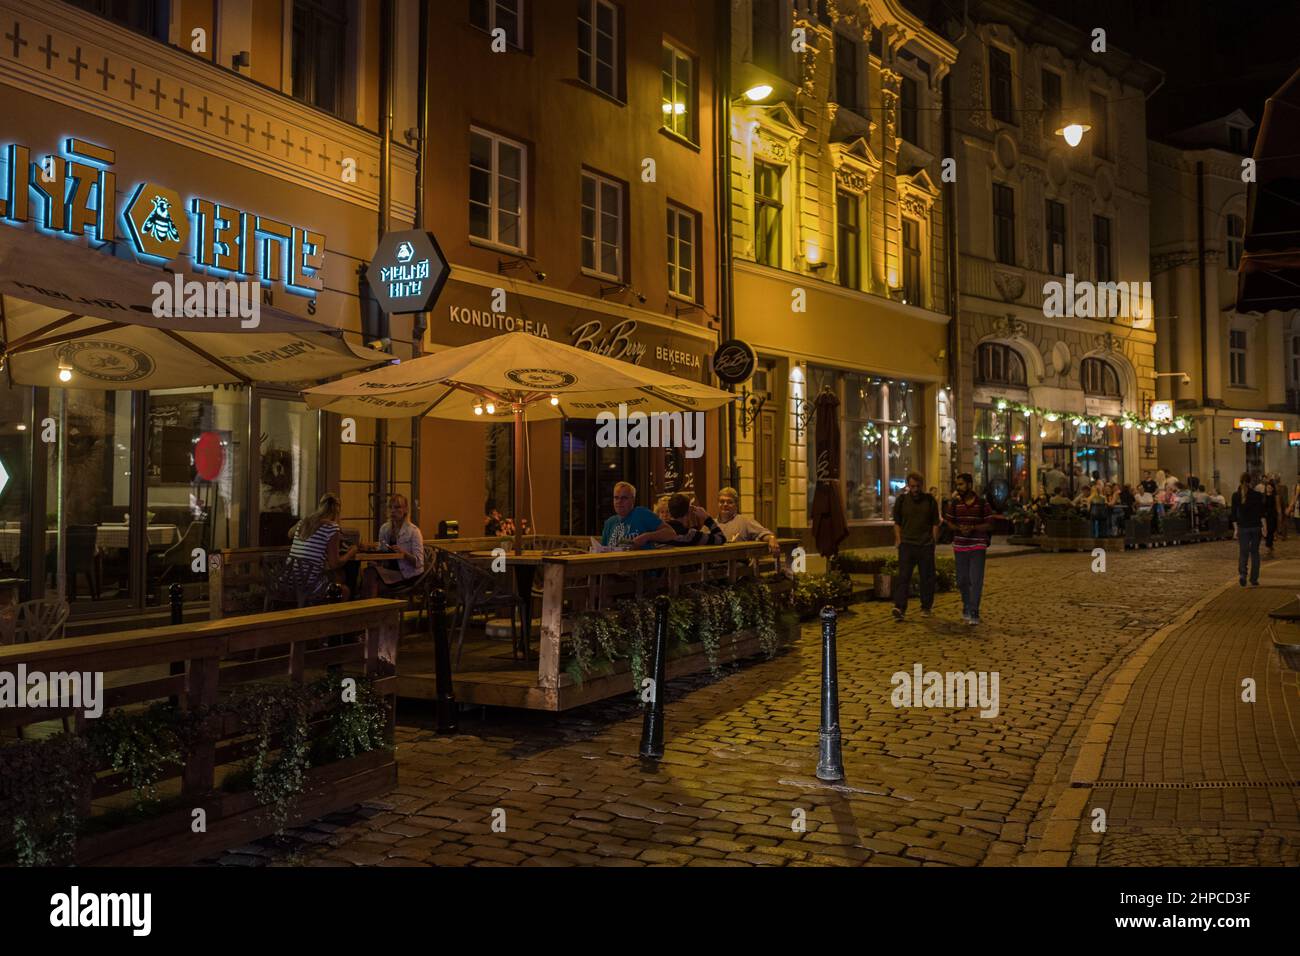 Straßenlokale in Rigas Altstadt, Street bars in Riga's Old Town Stock Photo